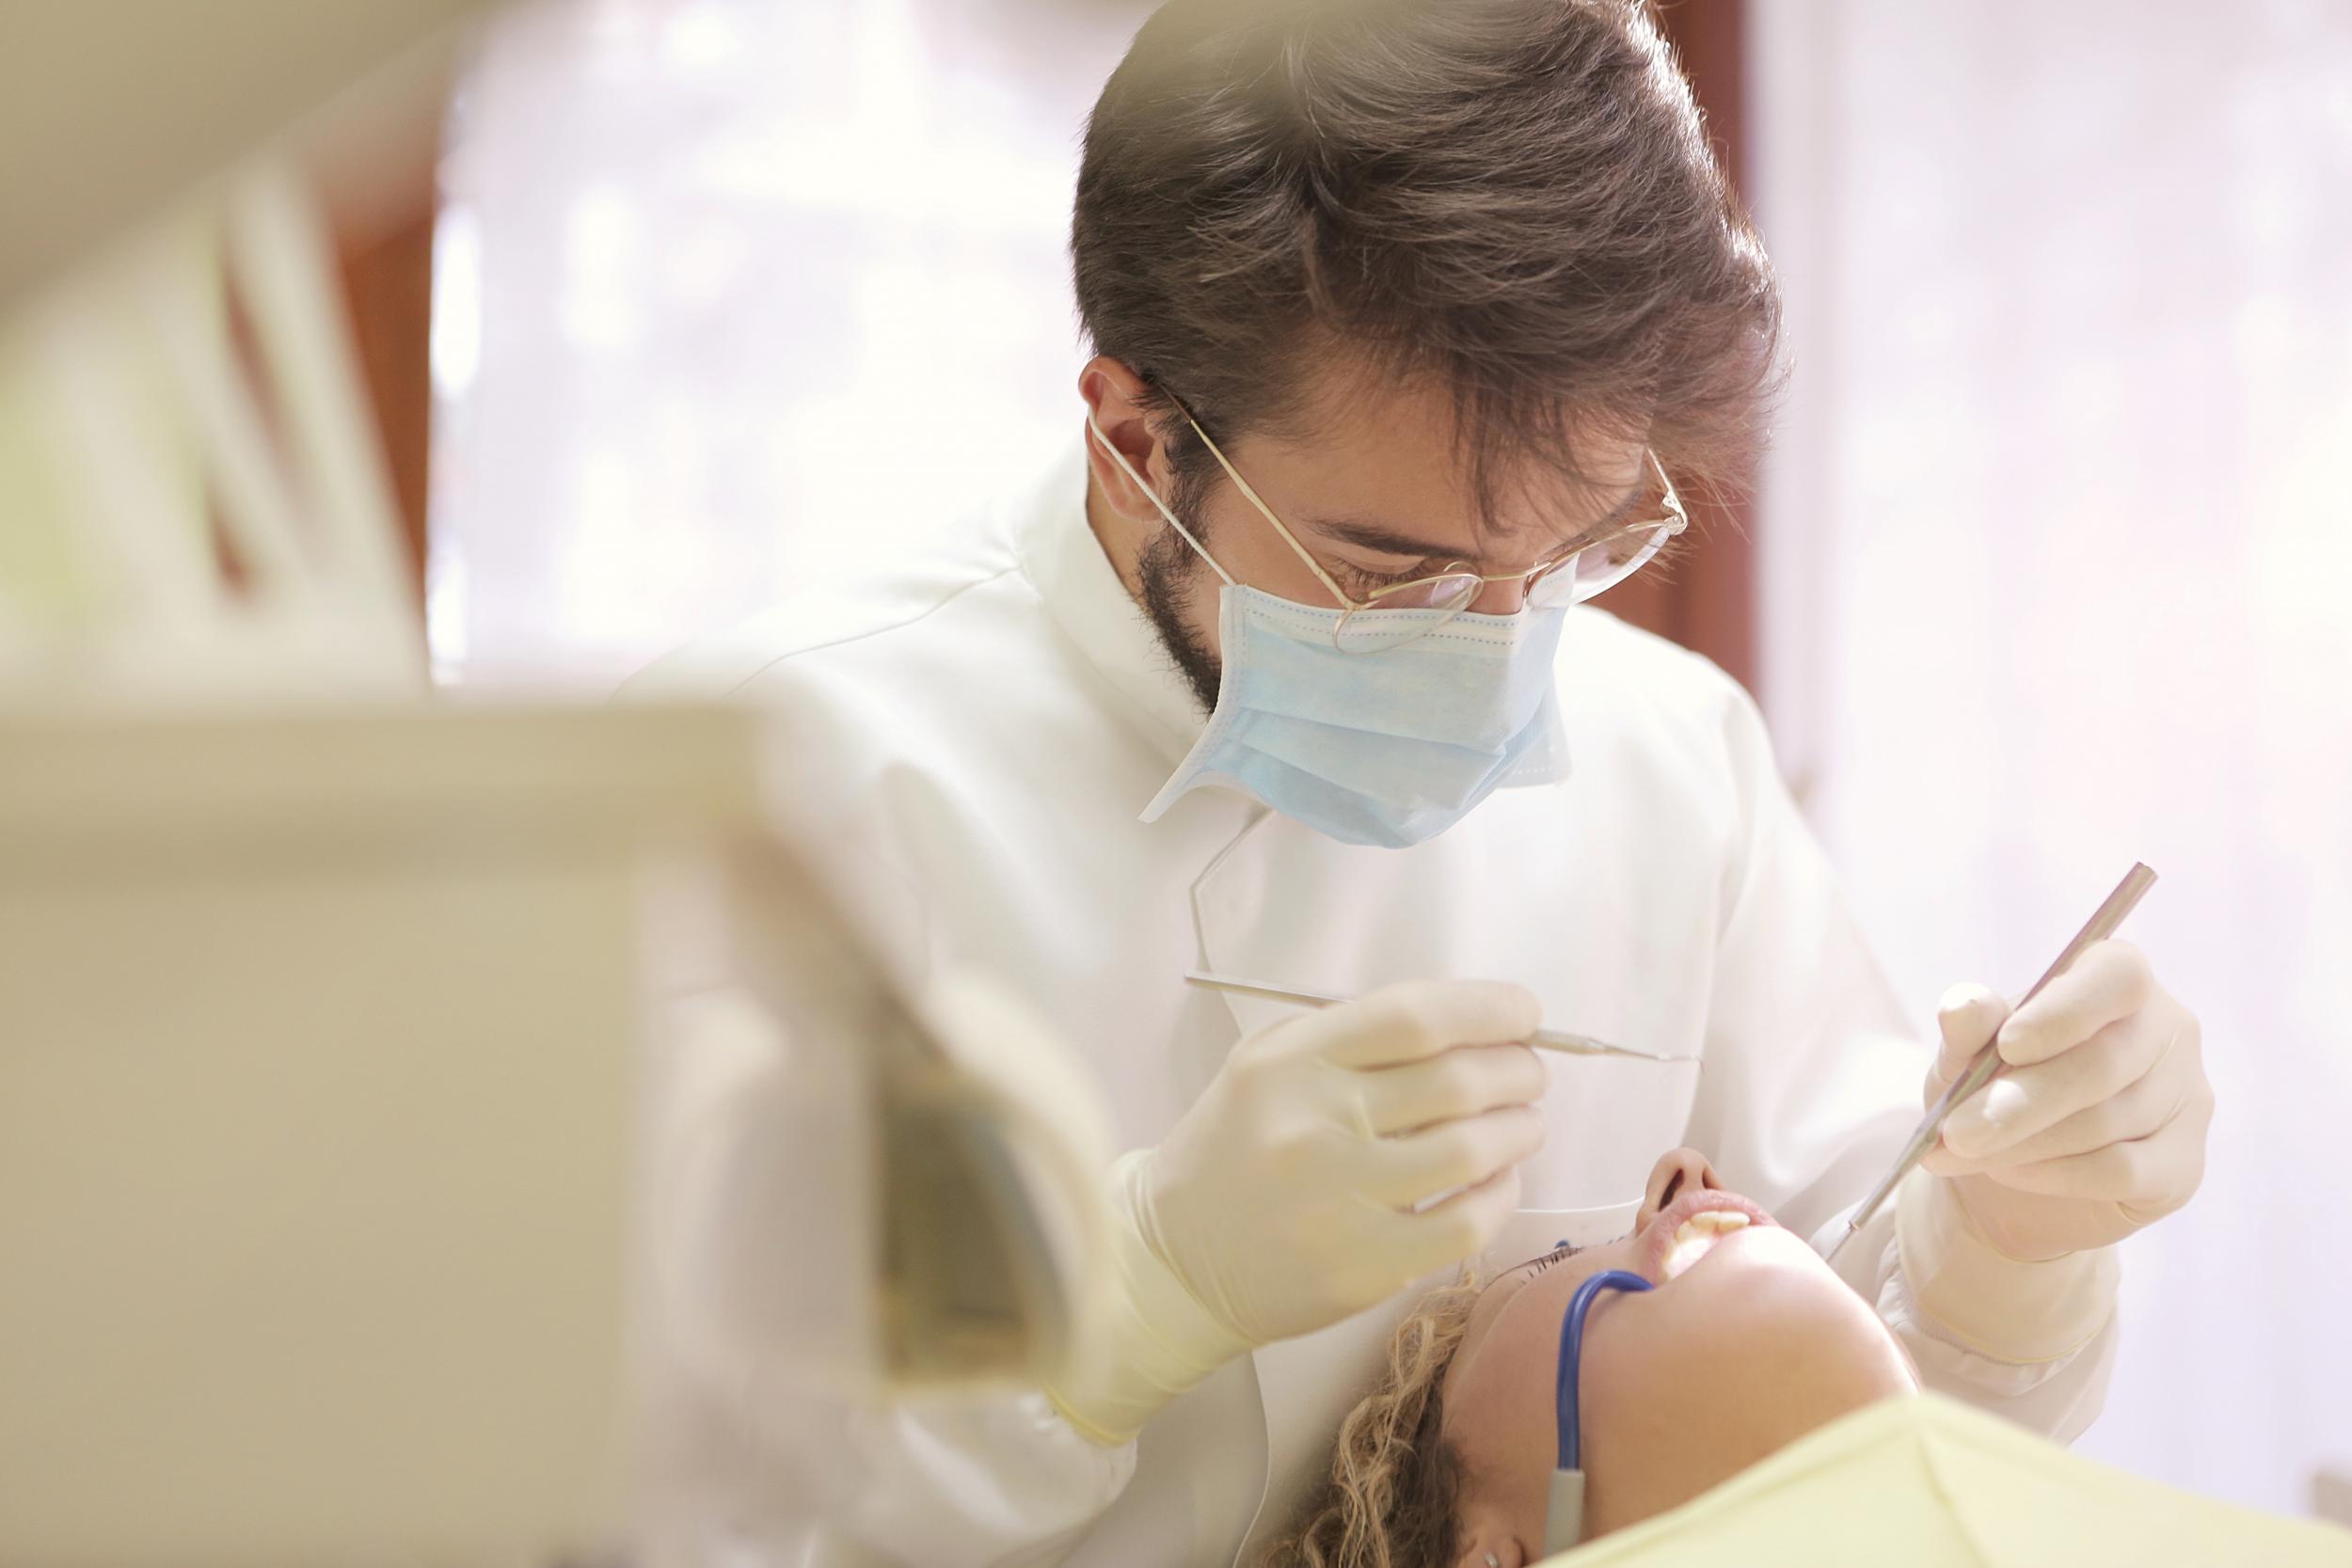 Best Periodontics Dentistry For Inflamed Gums & Gingivitis In Santa Monica, CA